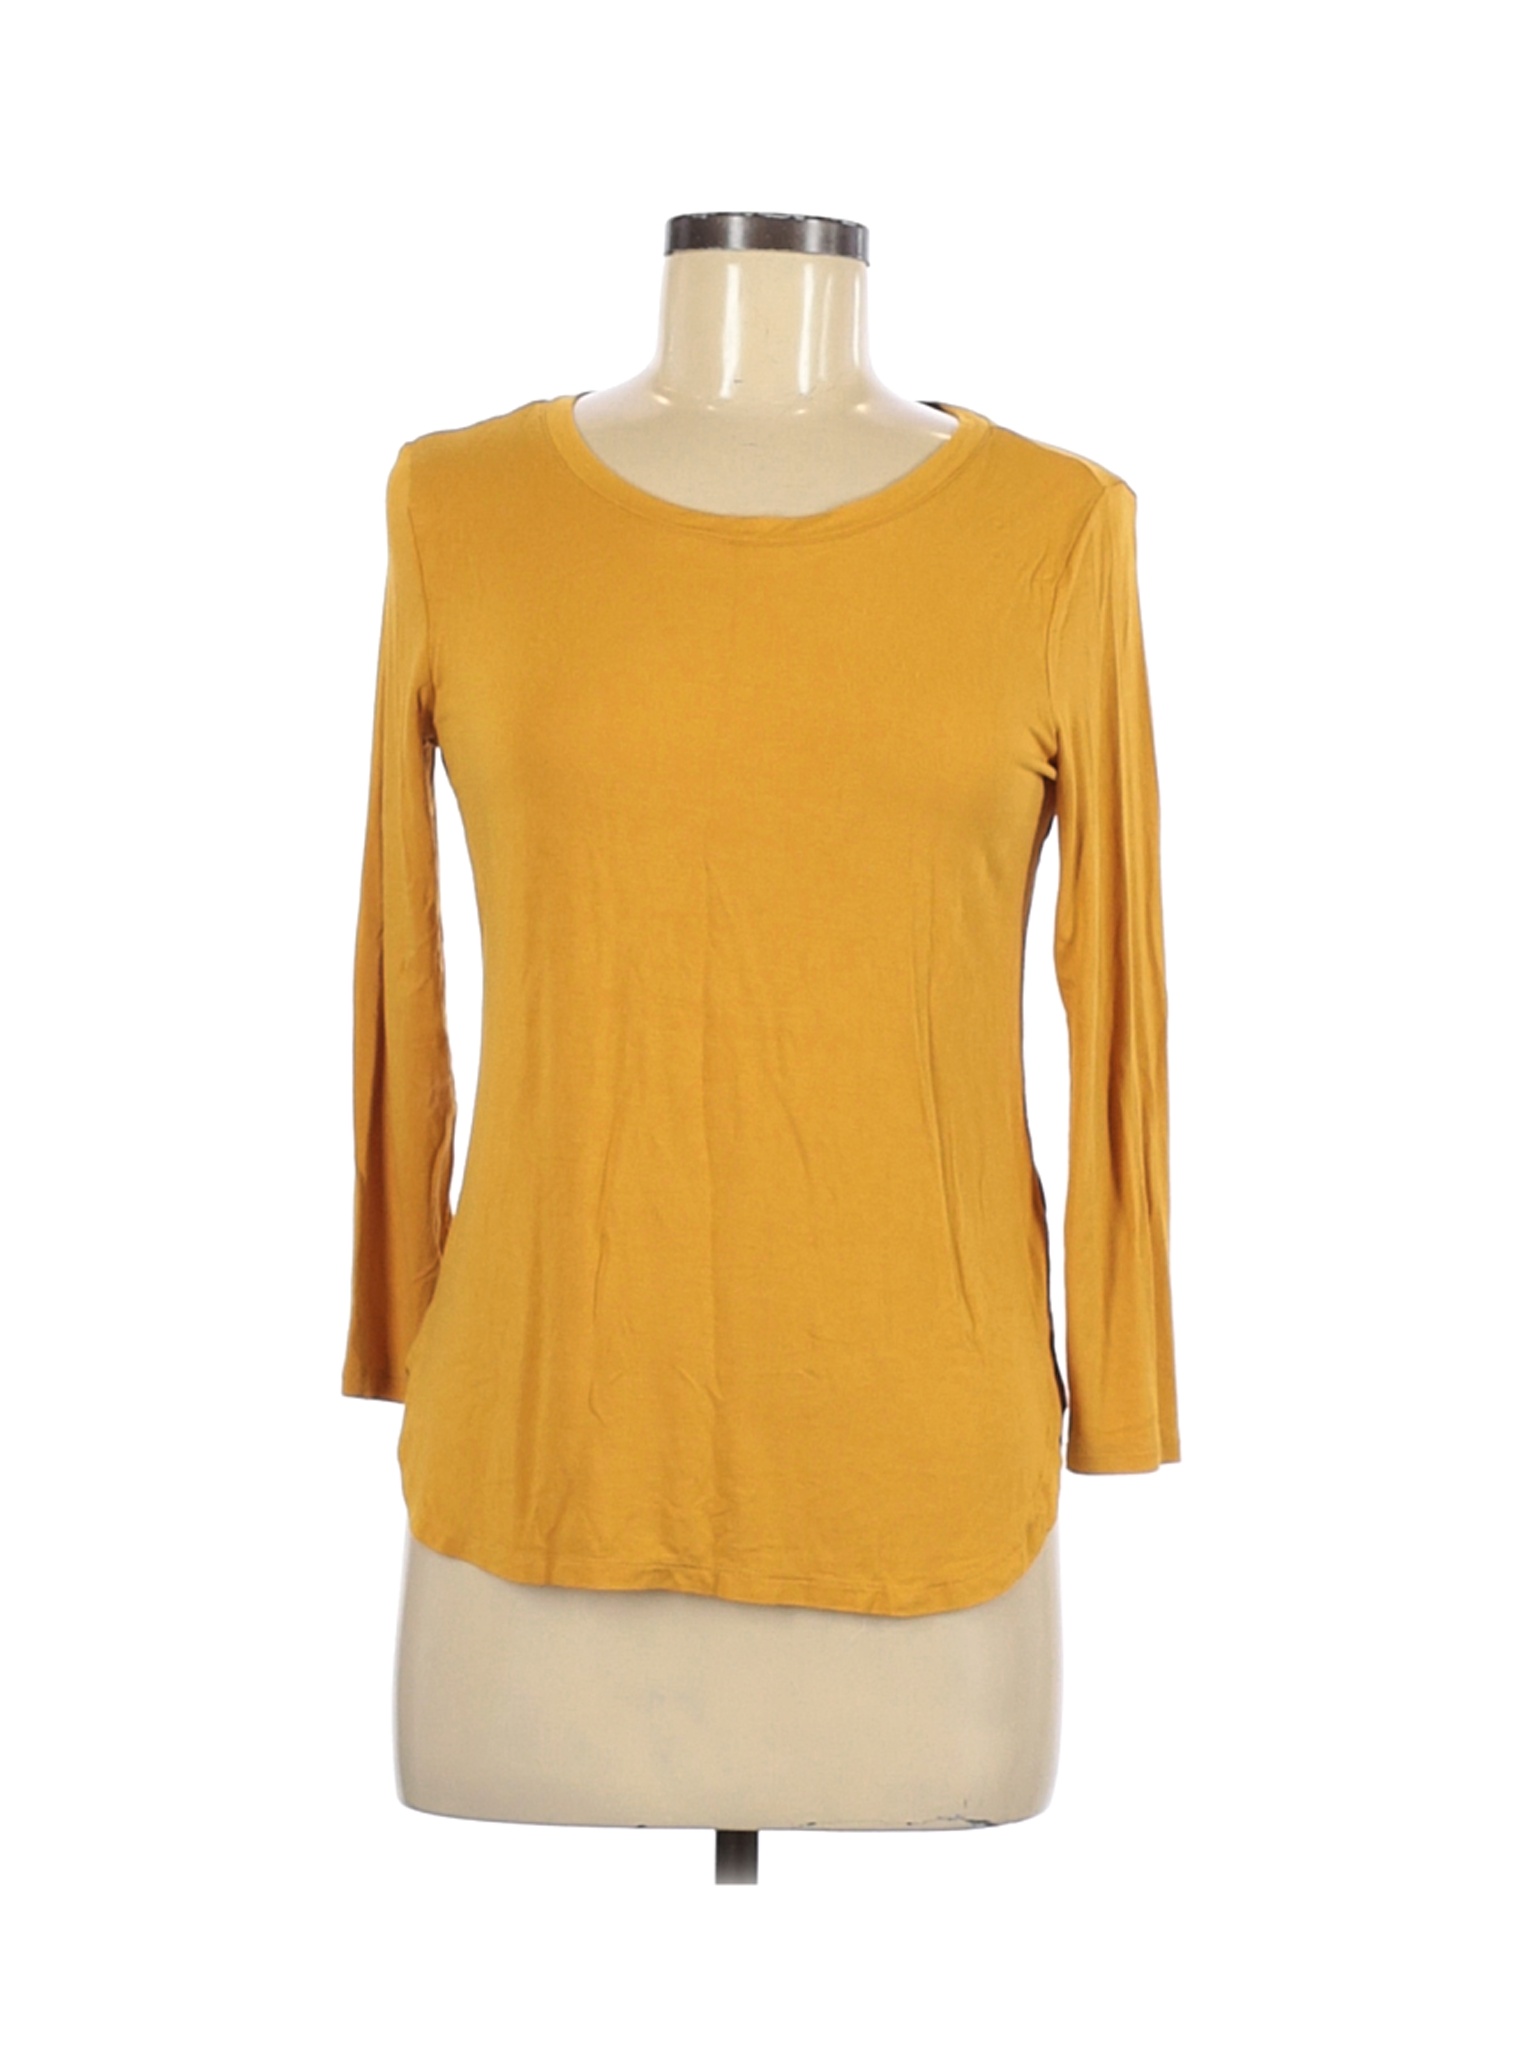 Old Navy Women Yellow Long Sleeve Top XS | eBay